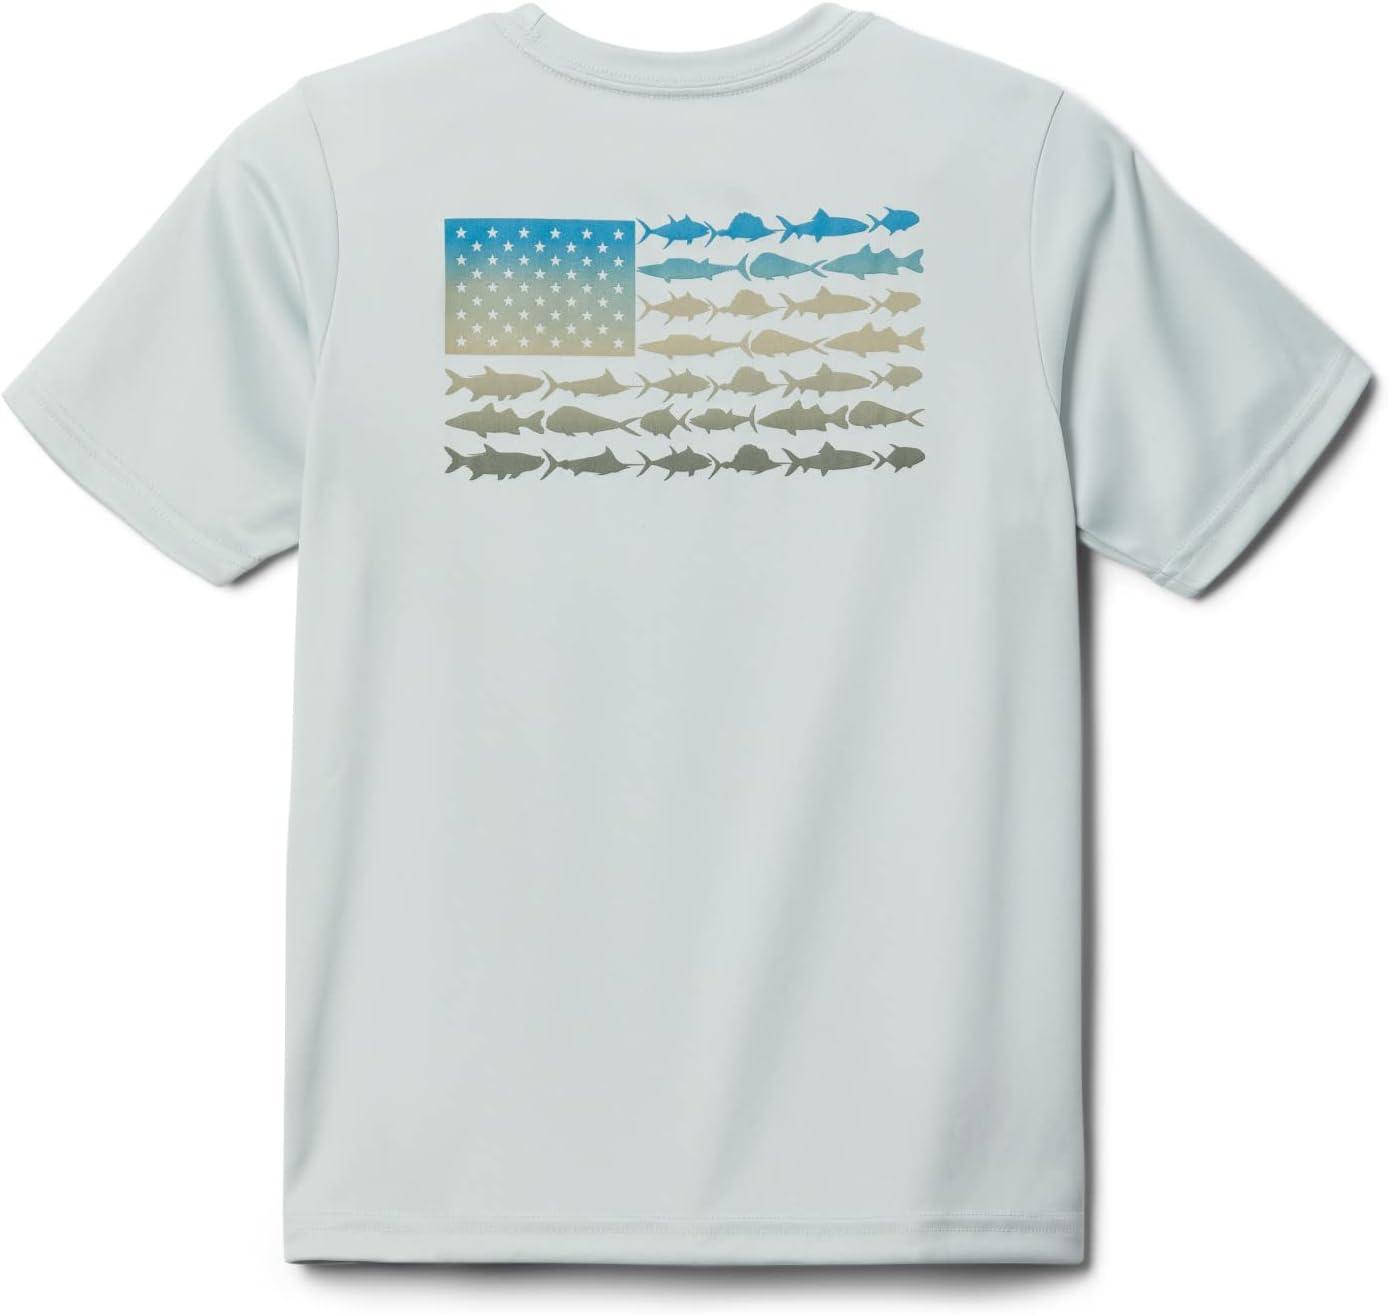 Boys Fishing Lure Shirt L